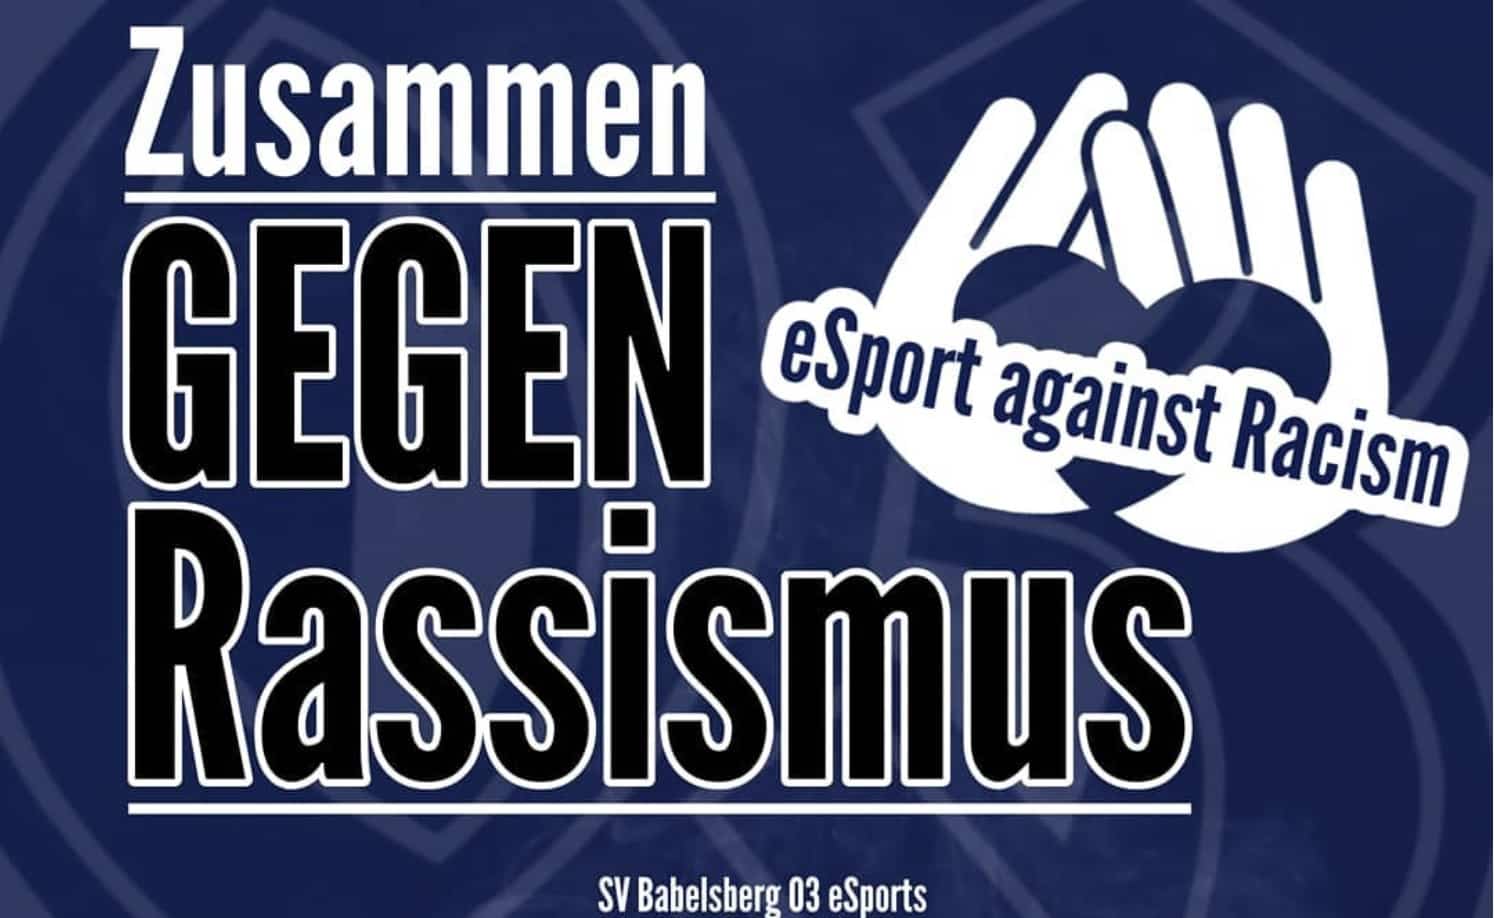 eSport against Racism babelsberg 03 esports